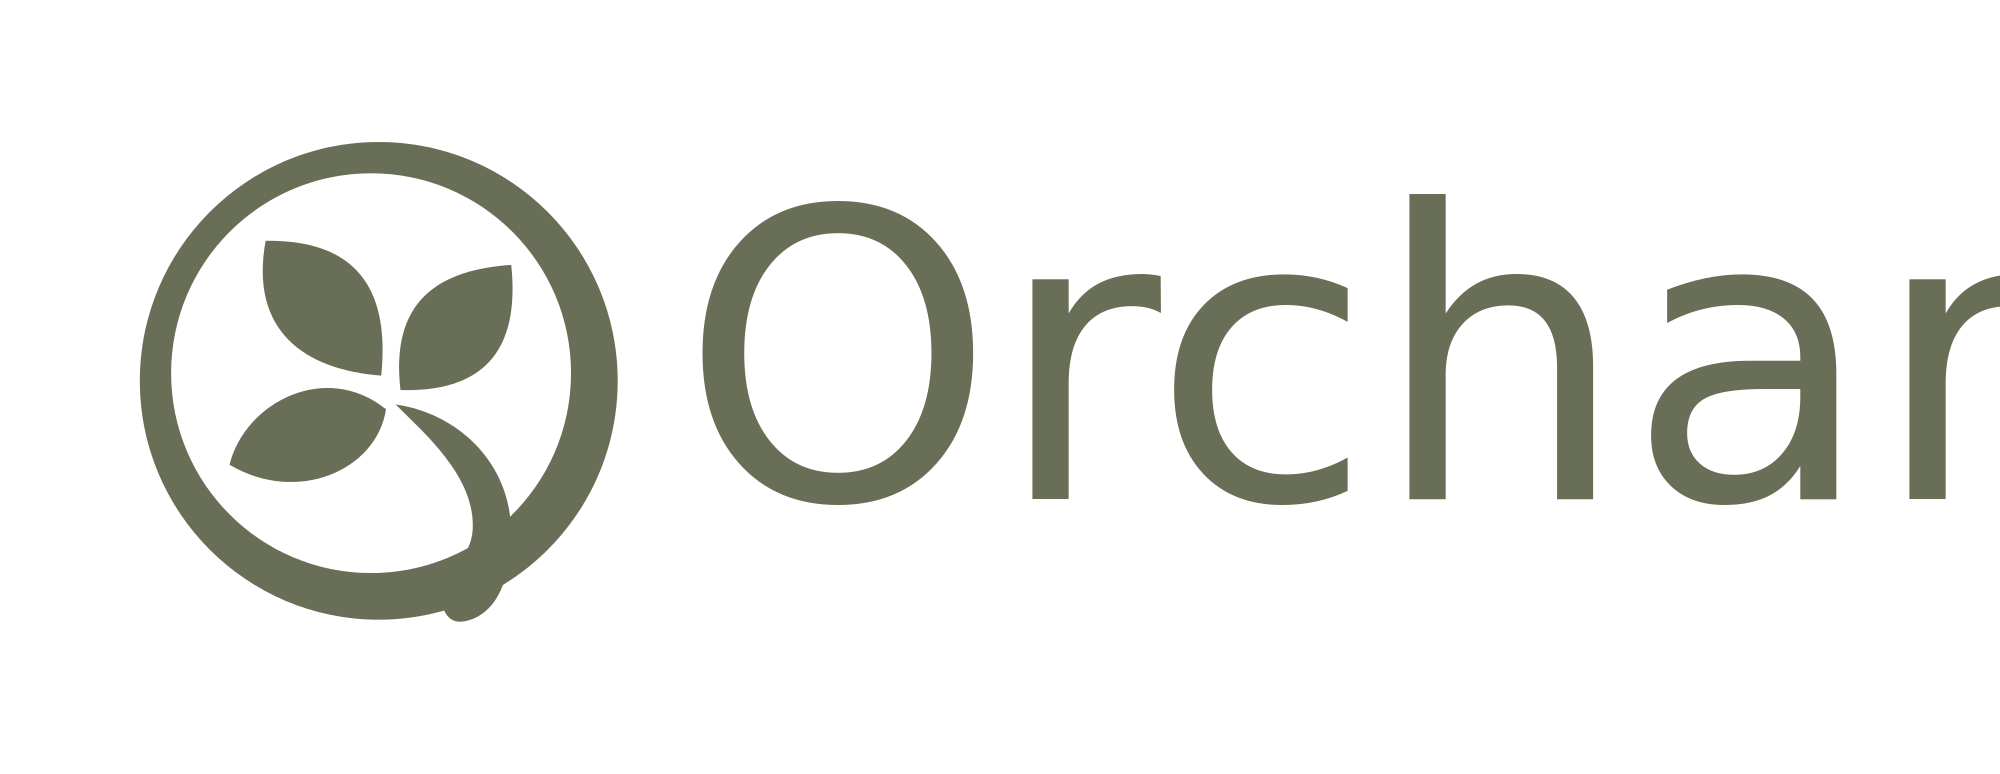 Orchard Logo - Orchard logo 3.svg